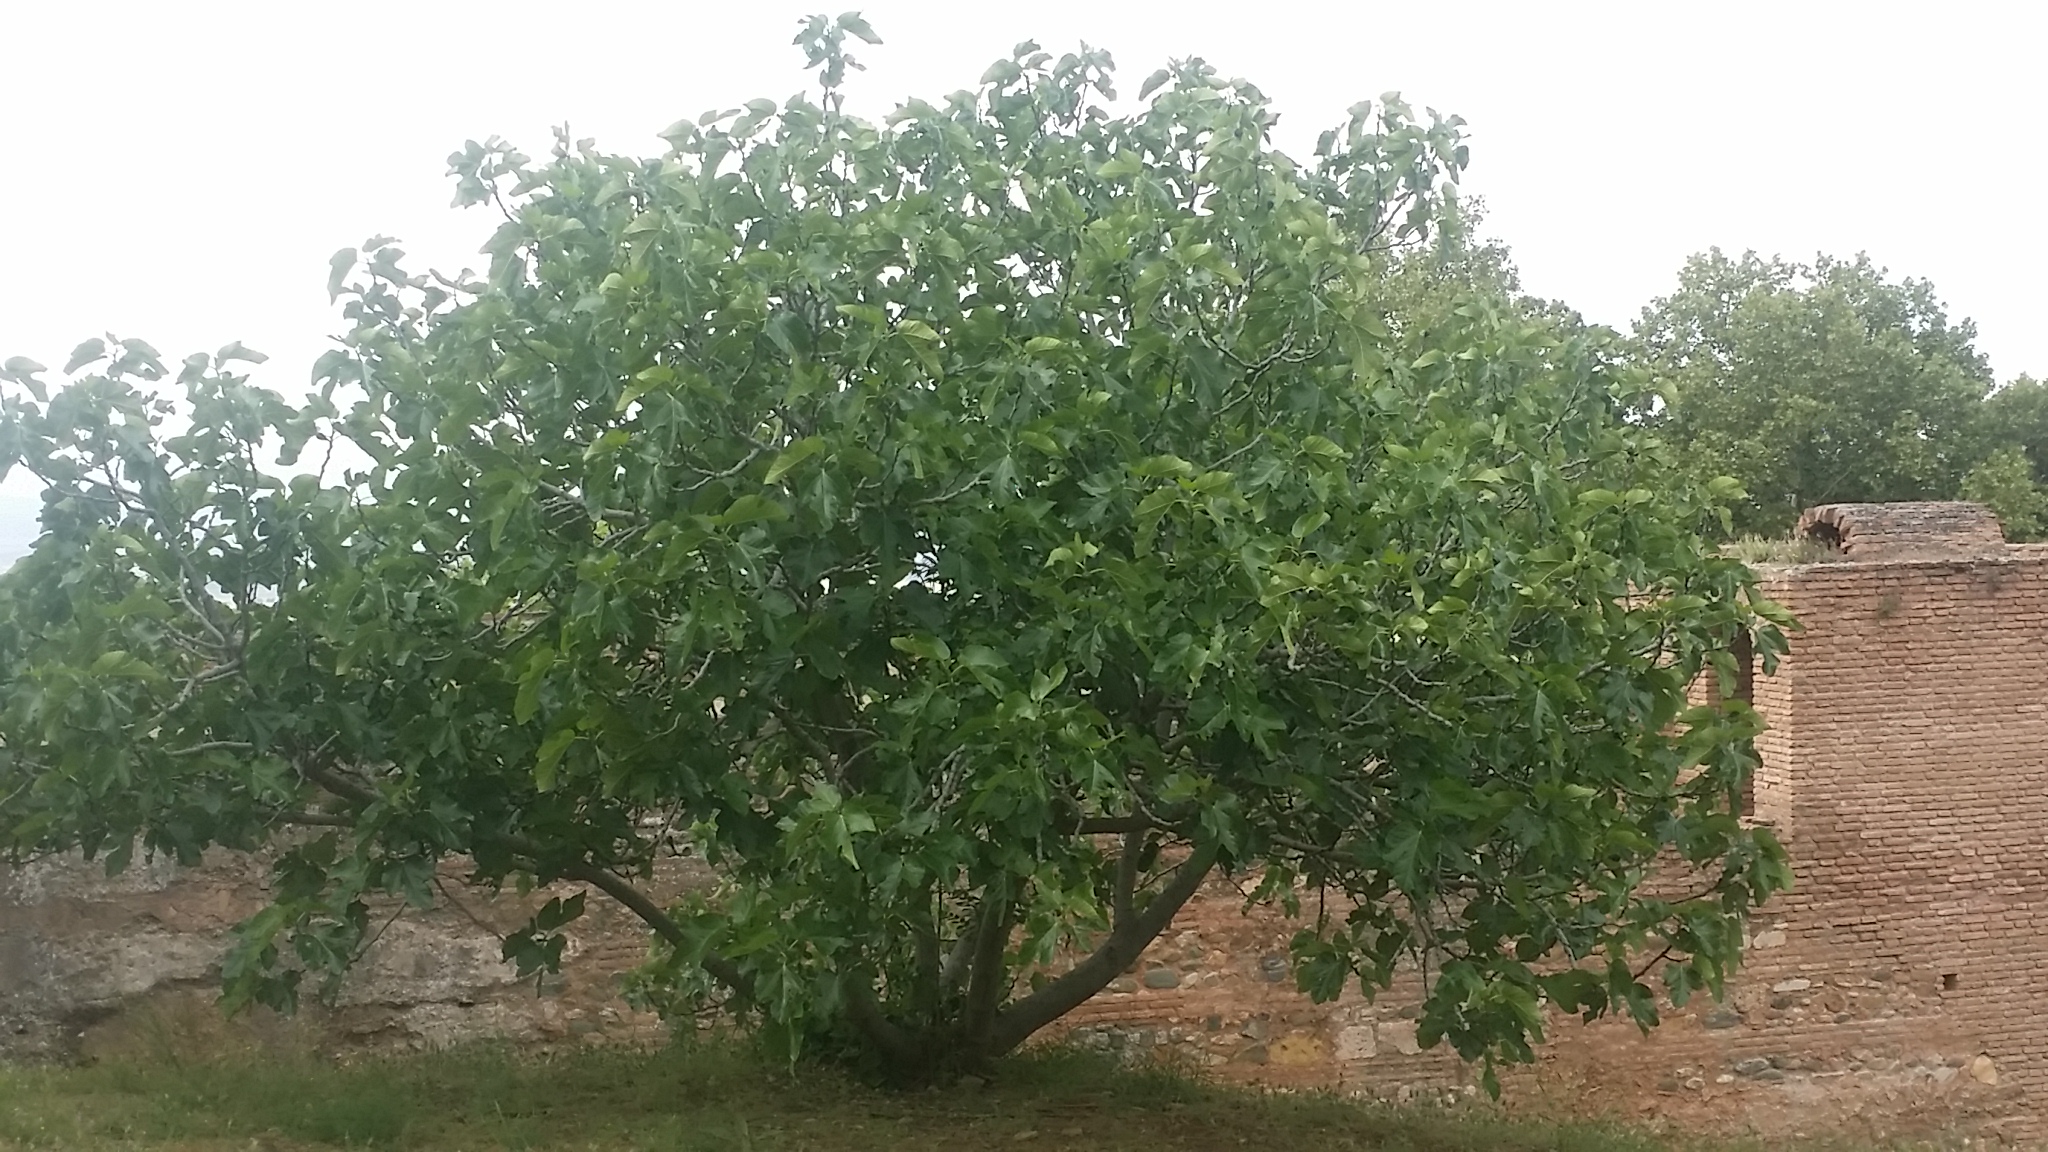 Ficus carica L or Common Fig